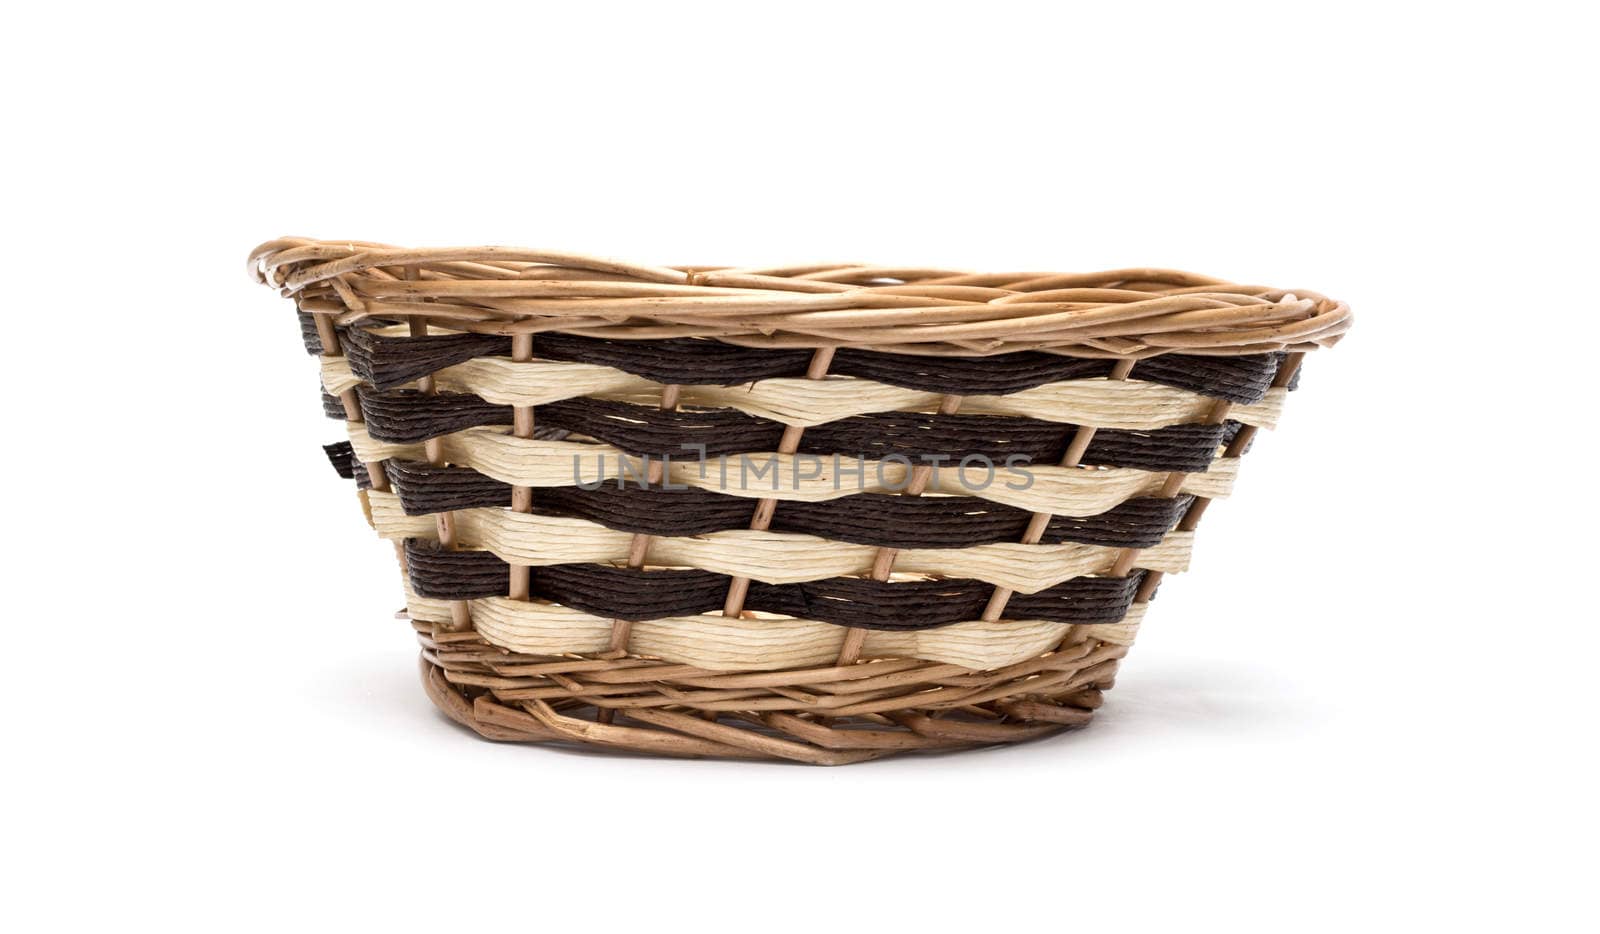 Basket on white background by DNKSTUDIO